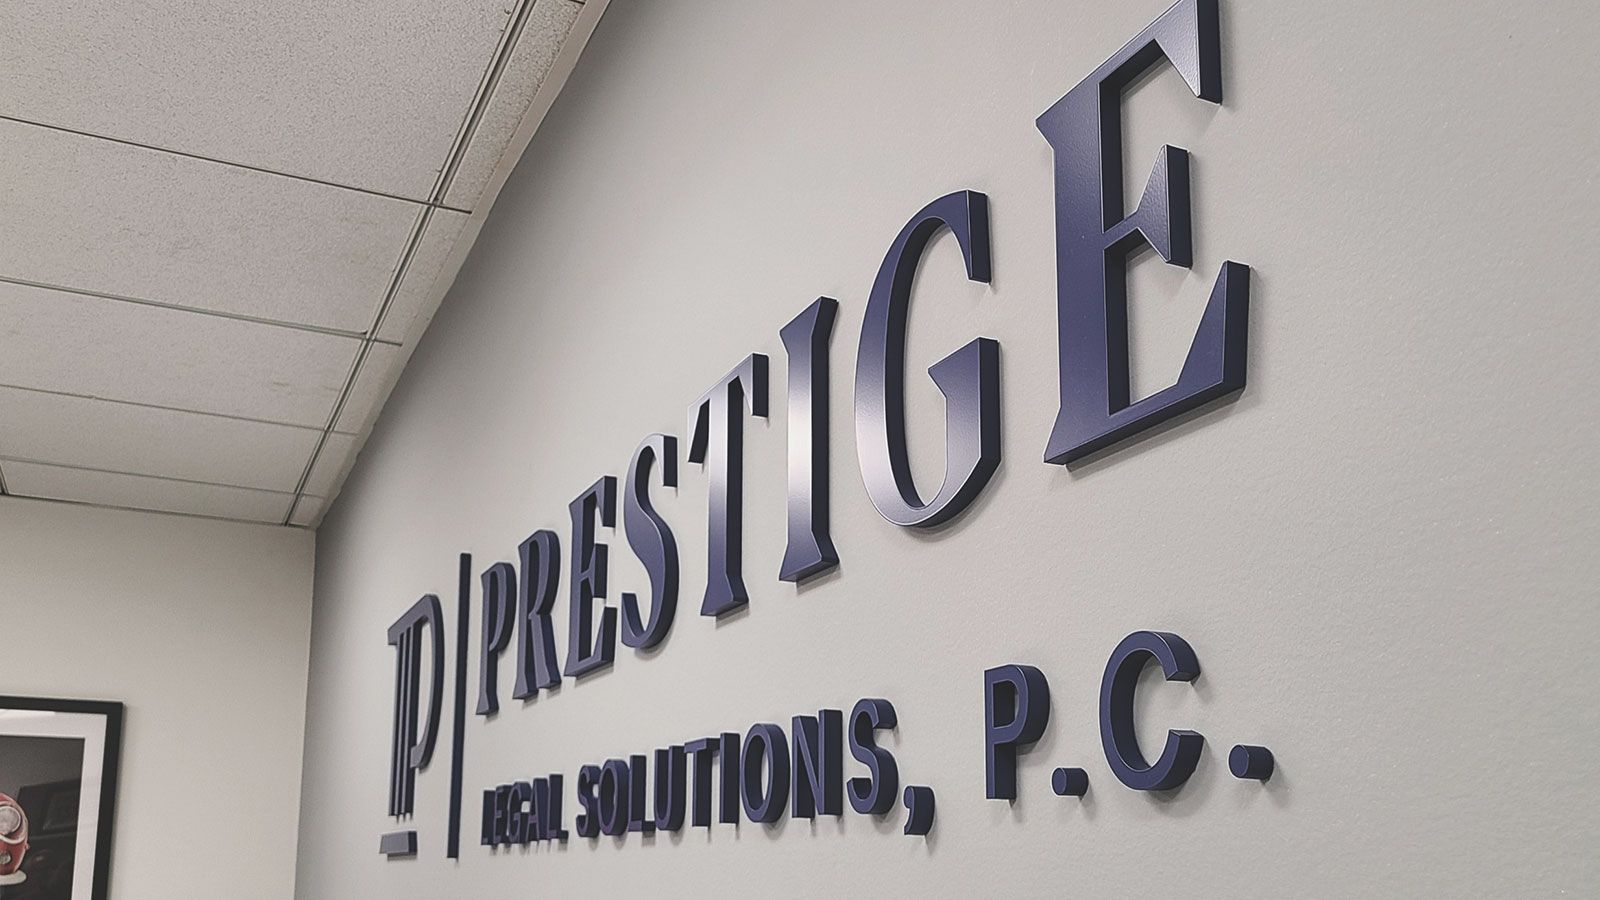 Prestige office 3D sign